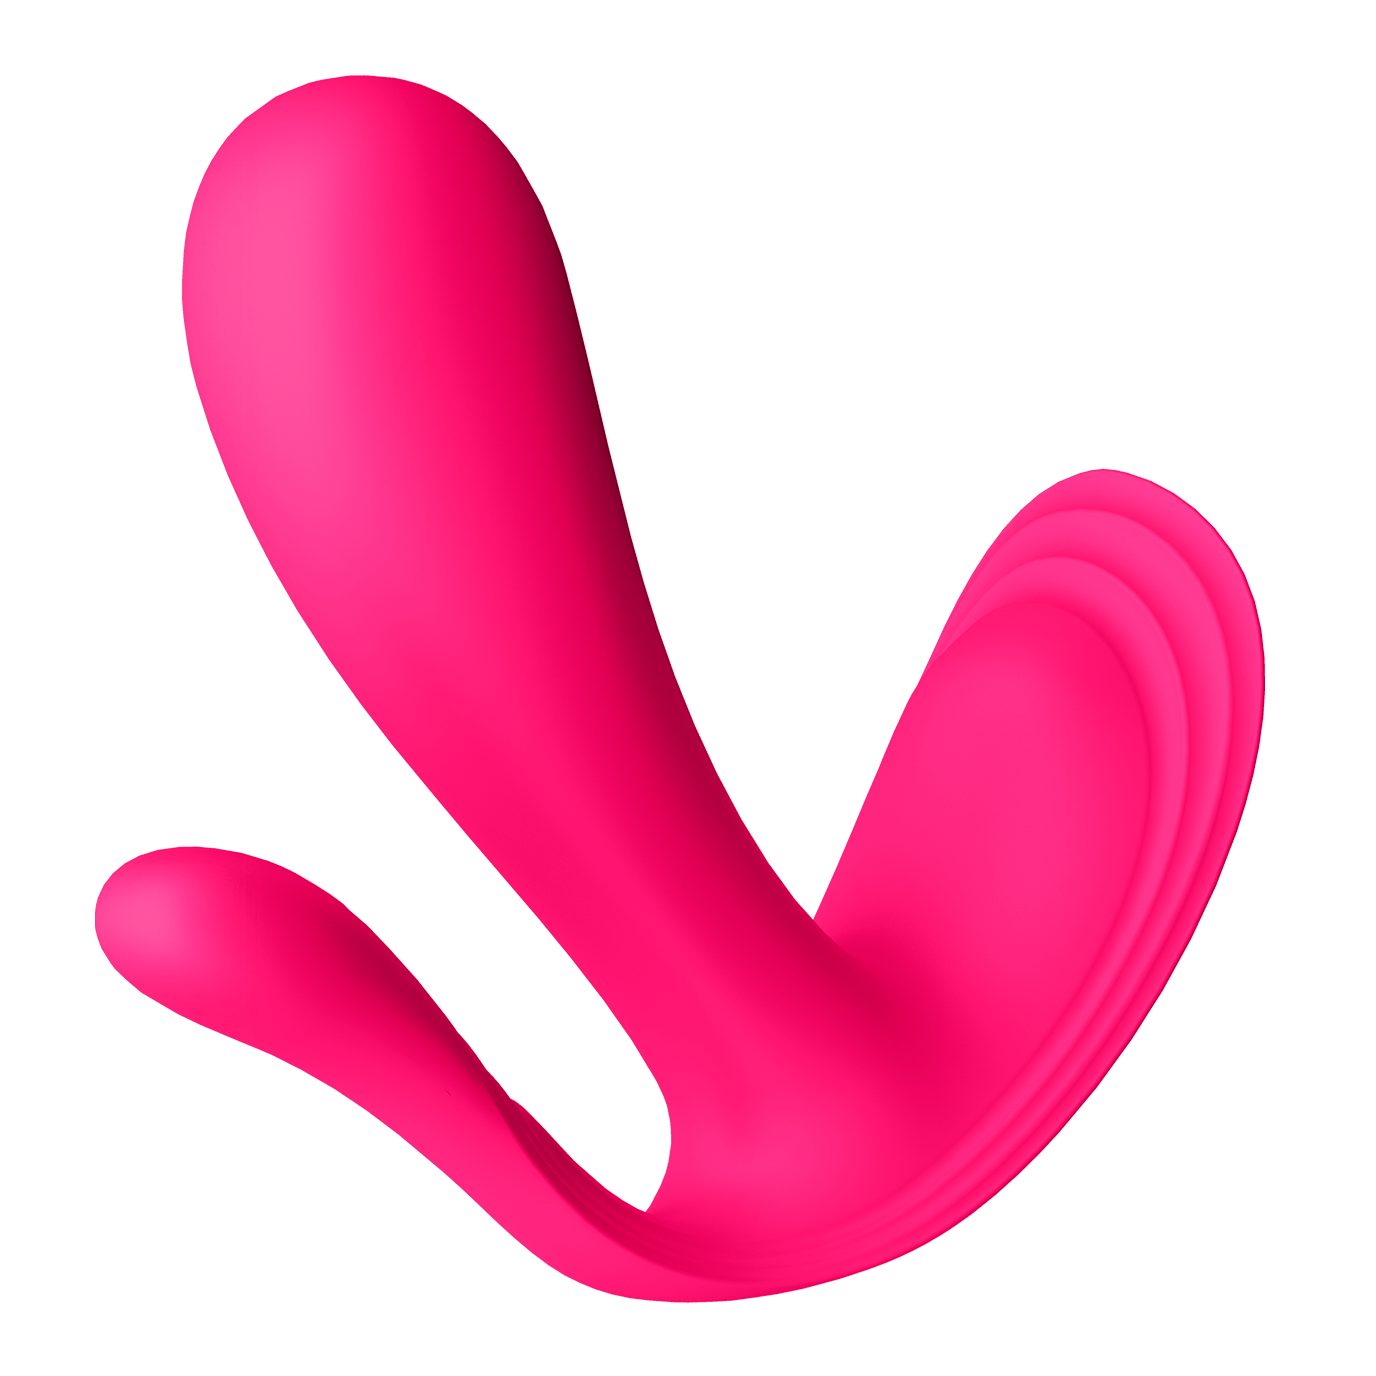 Satisfyer Klitoris-Stimulator Satisfyer 'Top Secret+ pink Vibrator, App', Bluetooth APP Connect mit 11cm